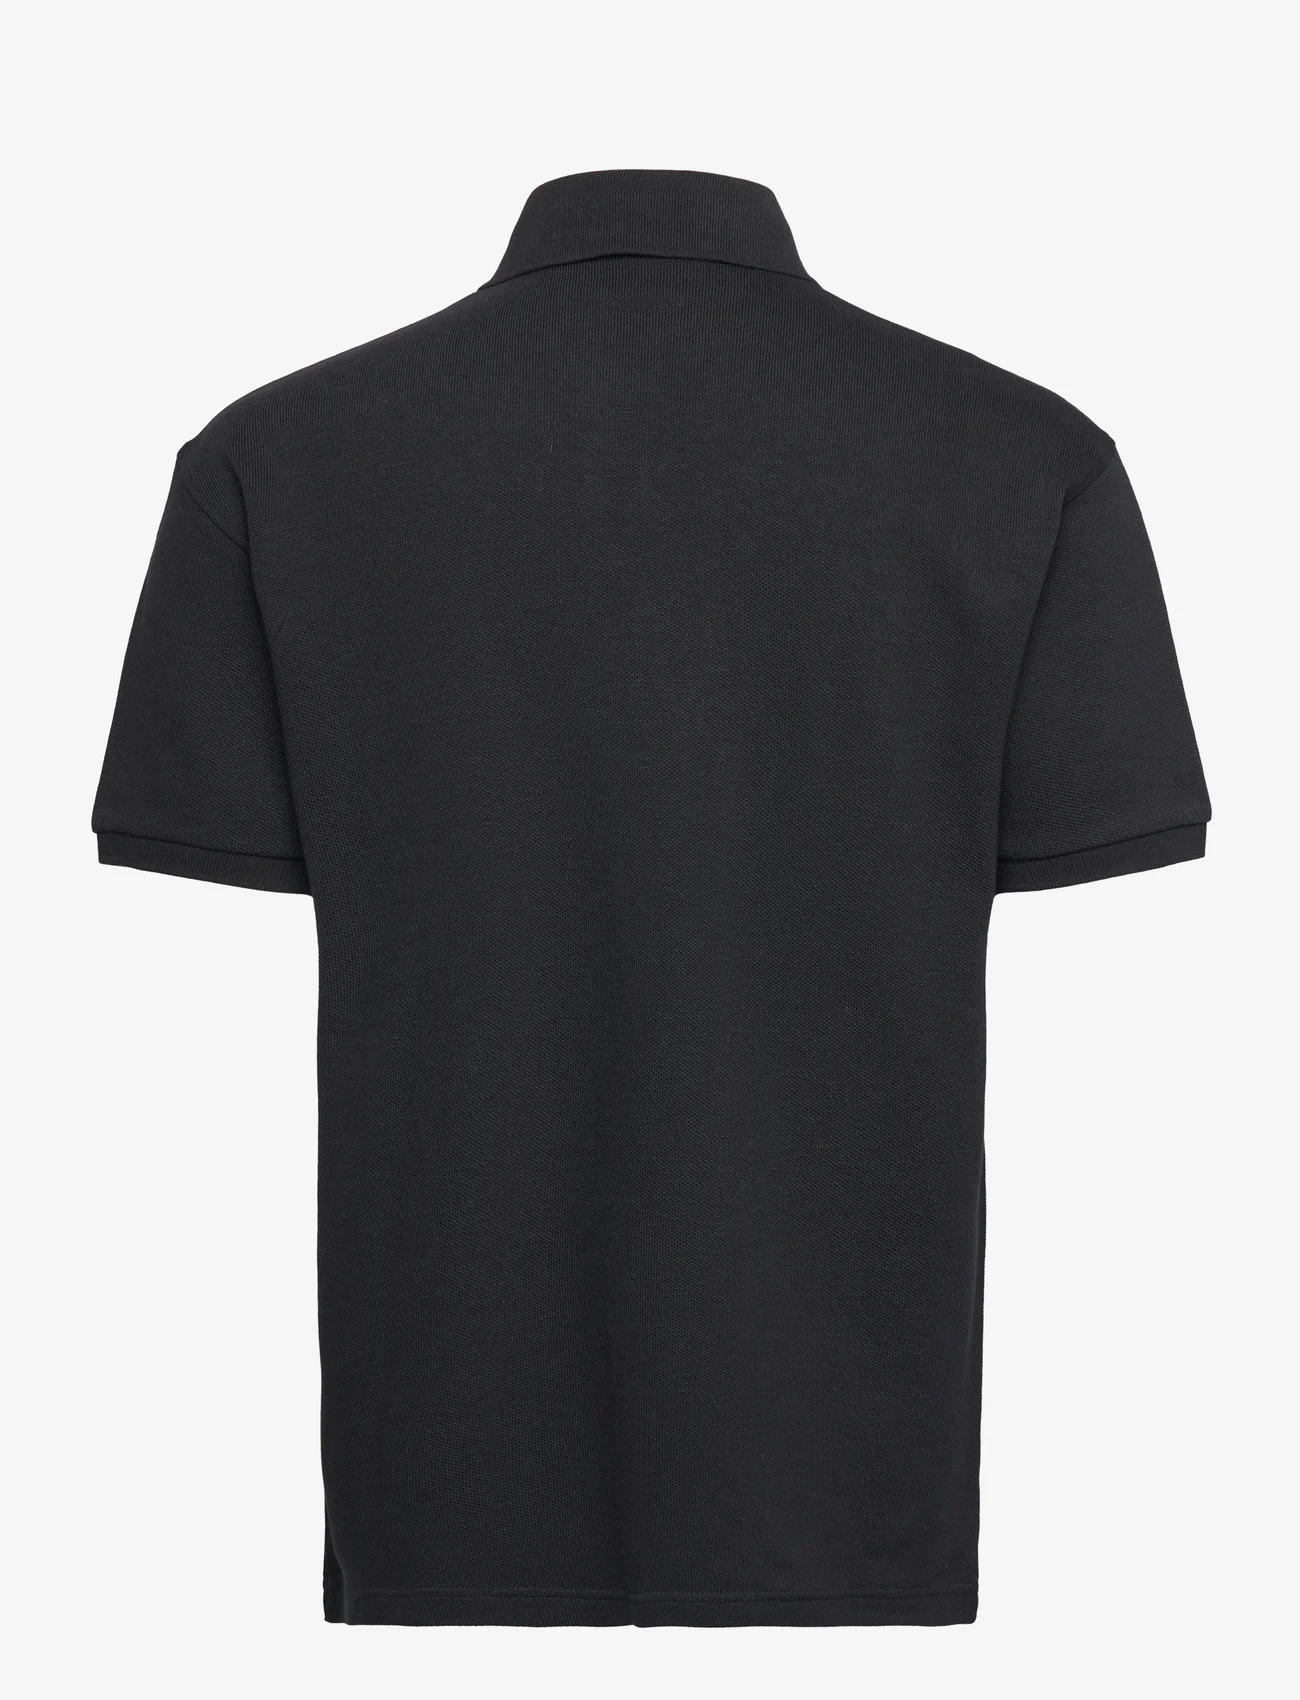 HAN Kjøbenhavn - Pique Polo Shirt - korte mouwen - black - 1